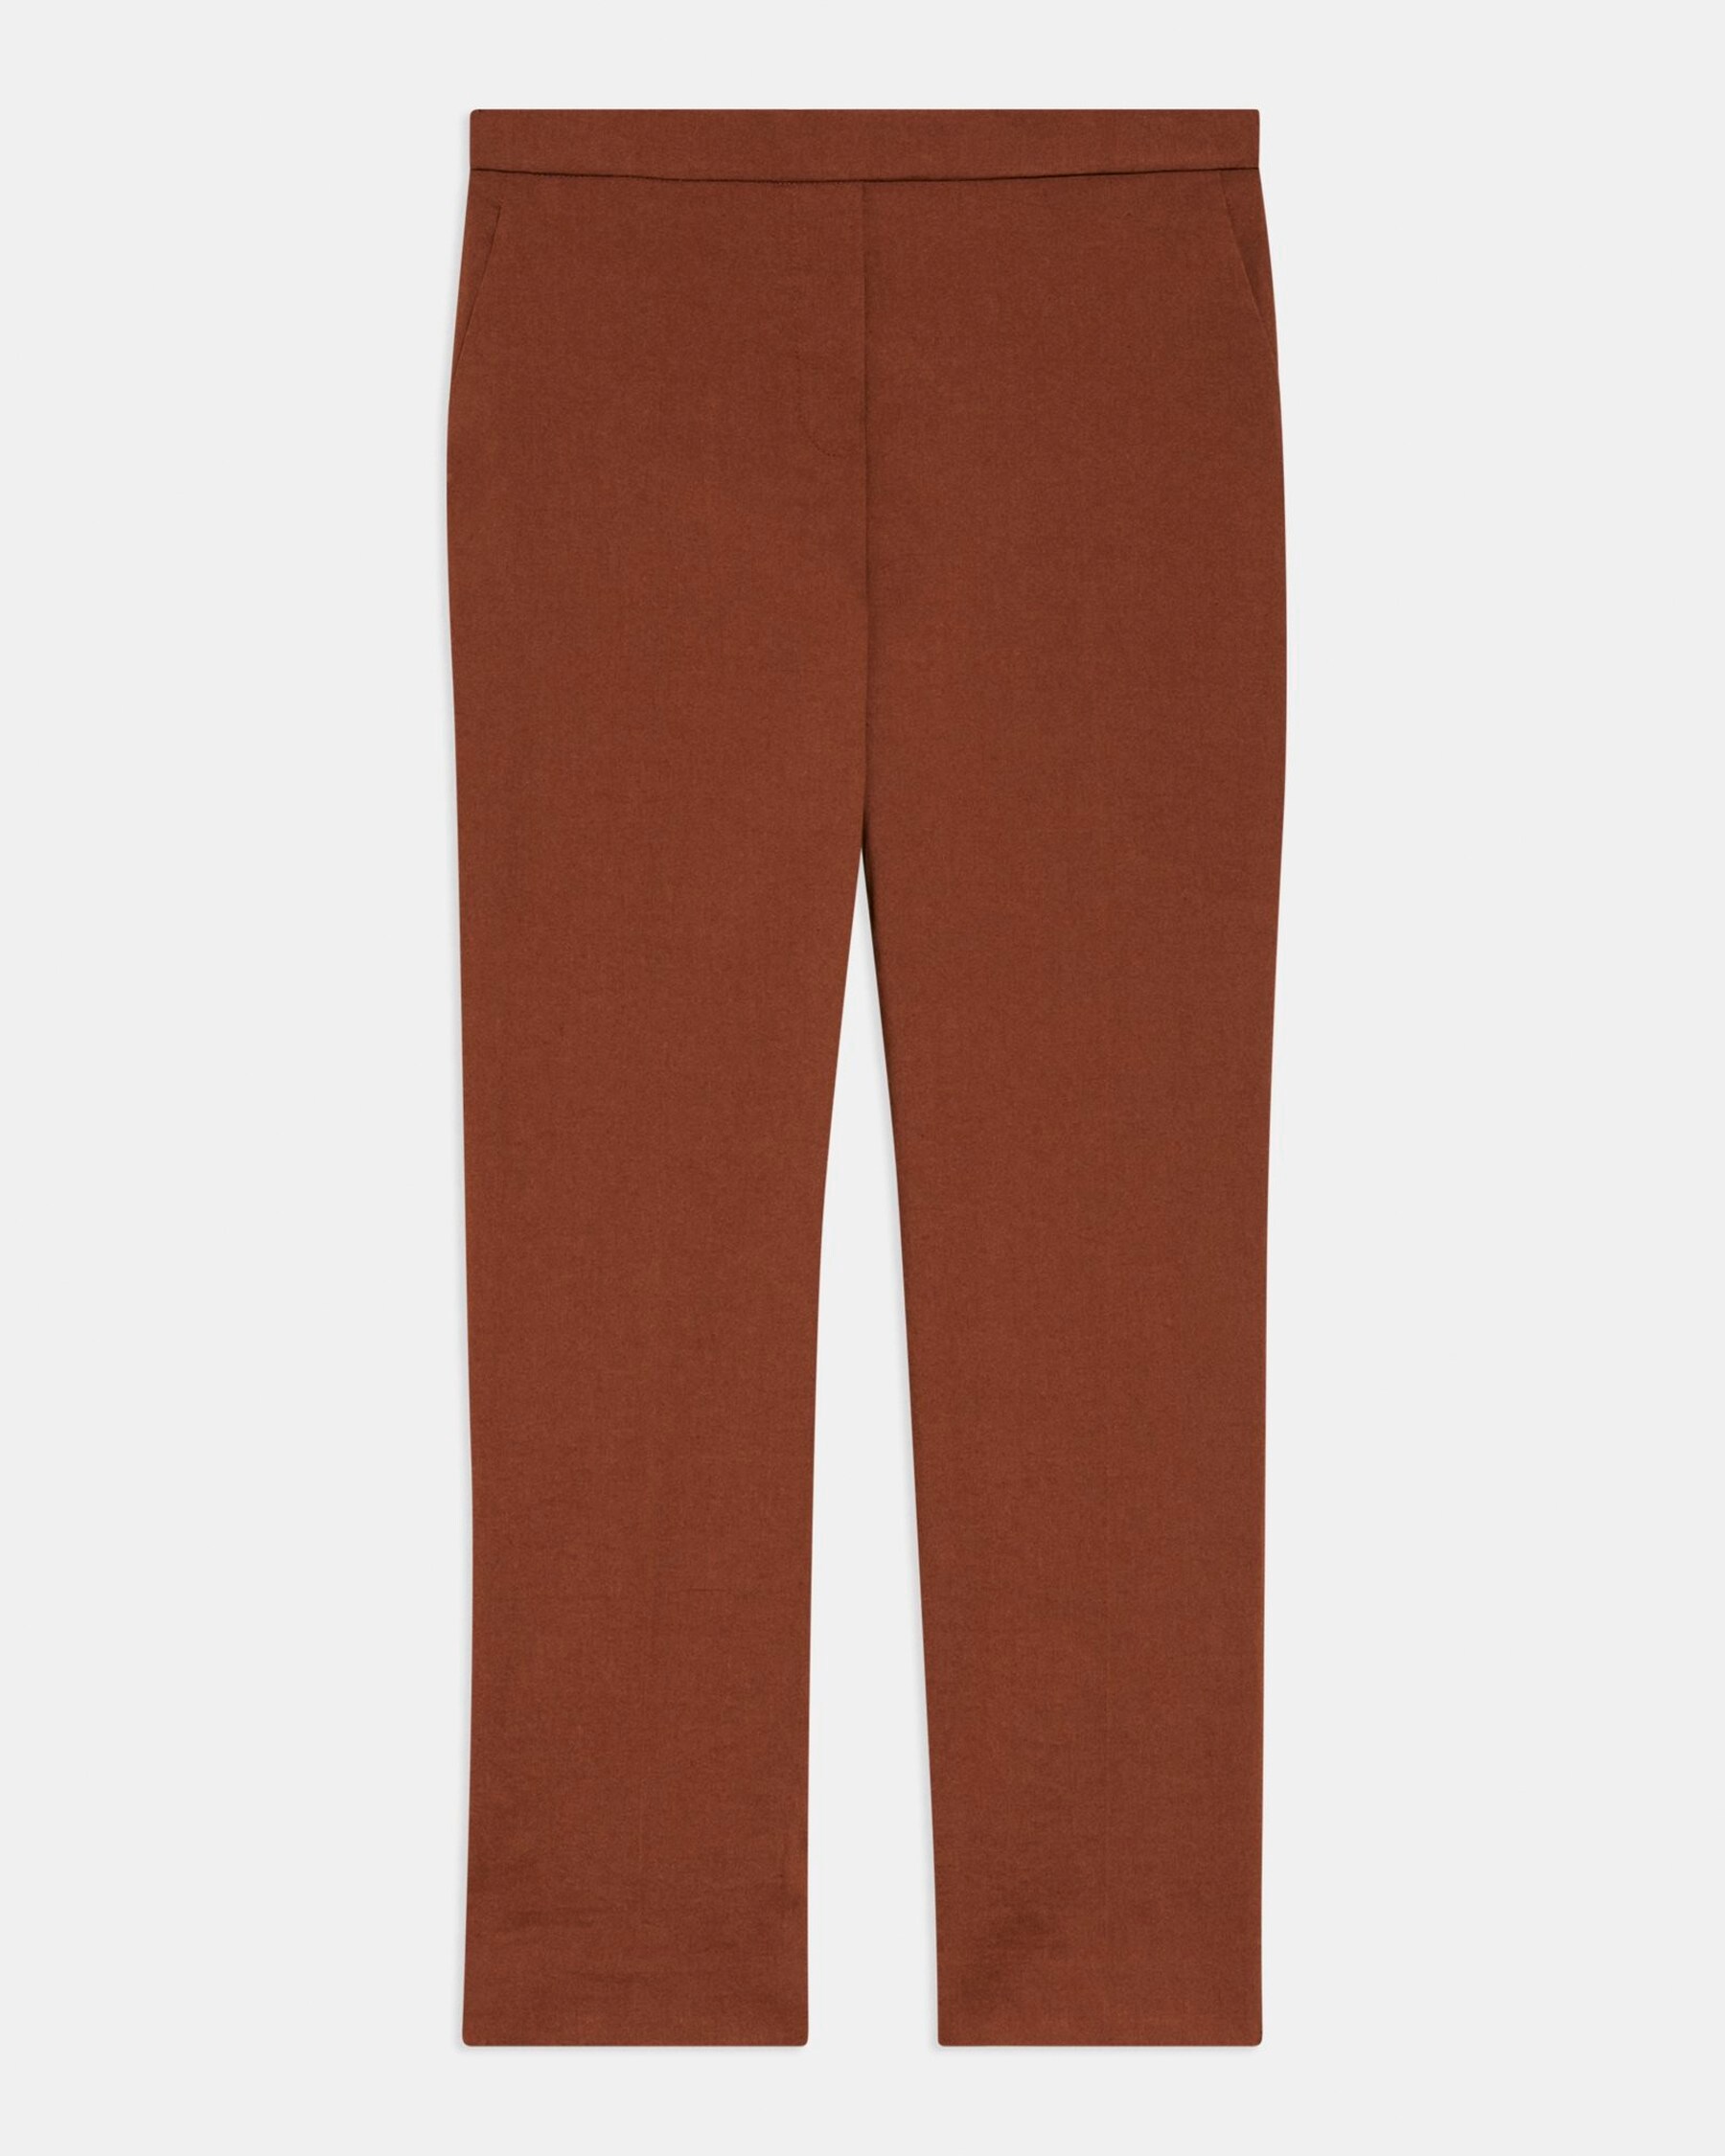 Treeca Pull-On Pant in Good Linen